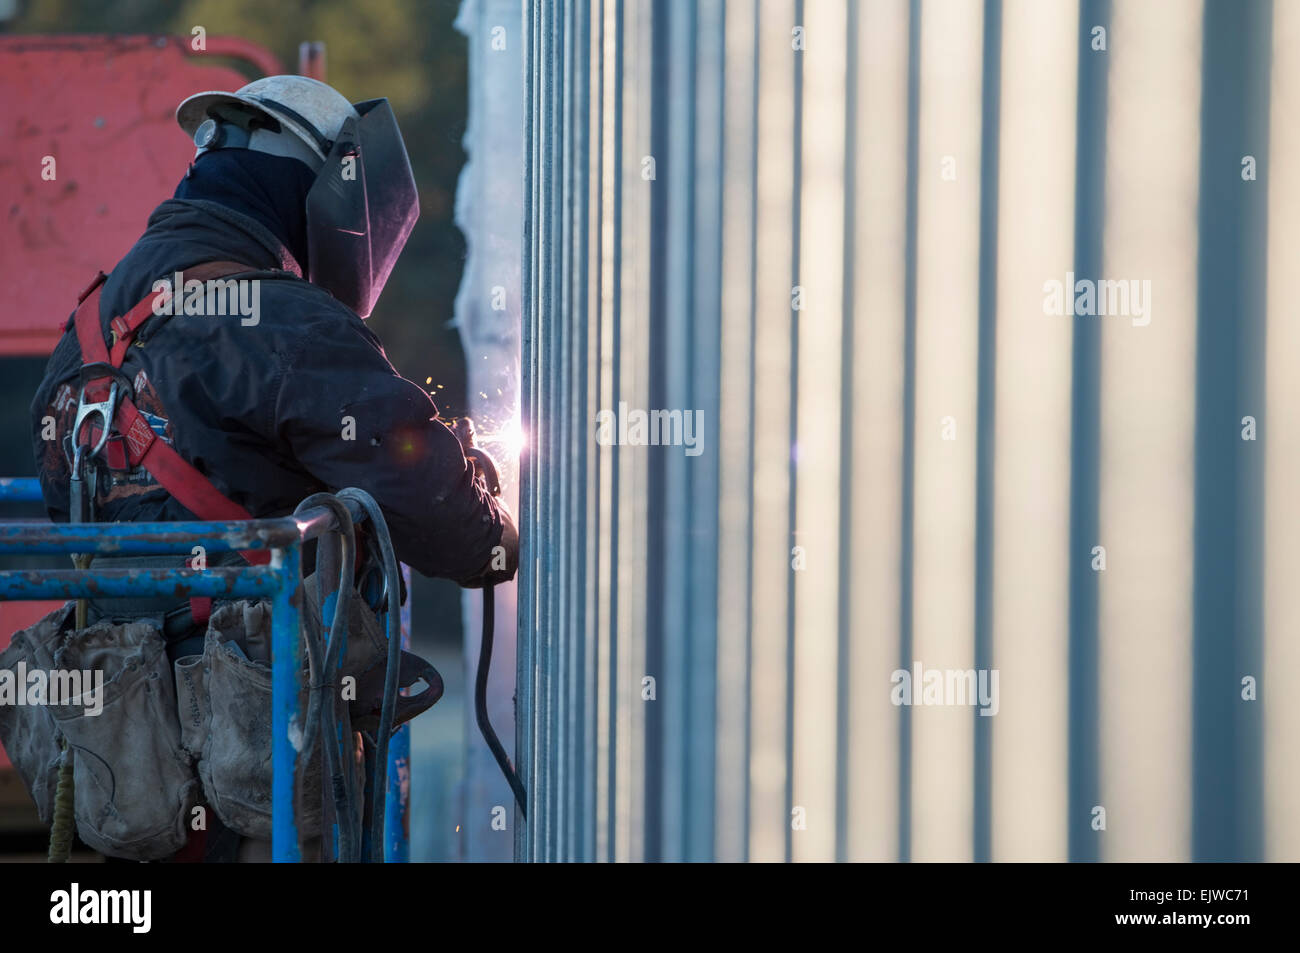 USA, Montana, Kalispell, Man welding steel bar Stock Photo